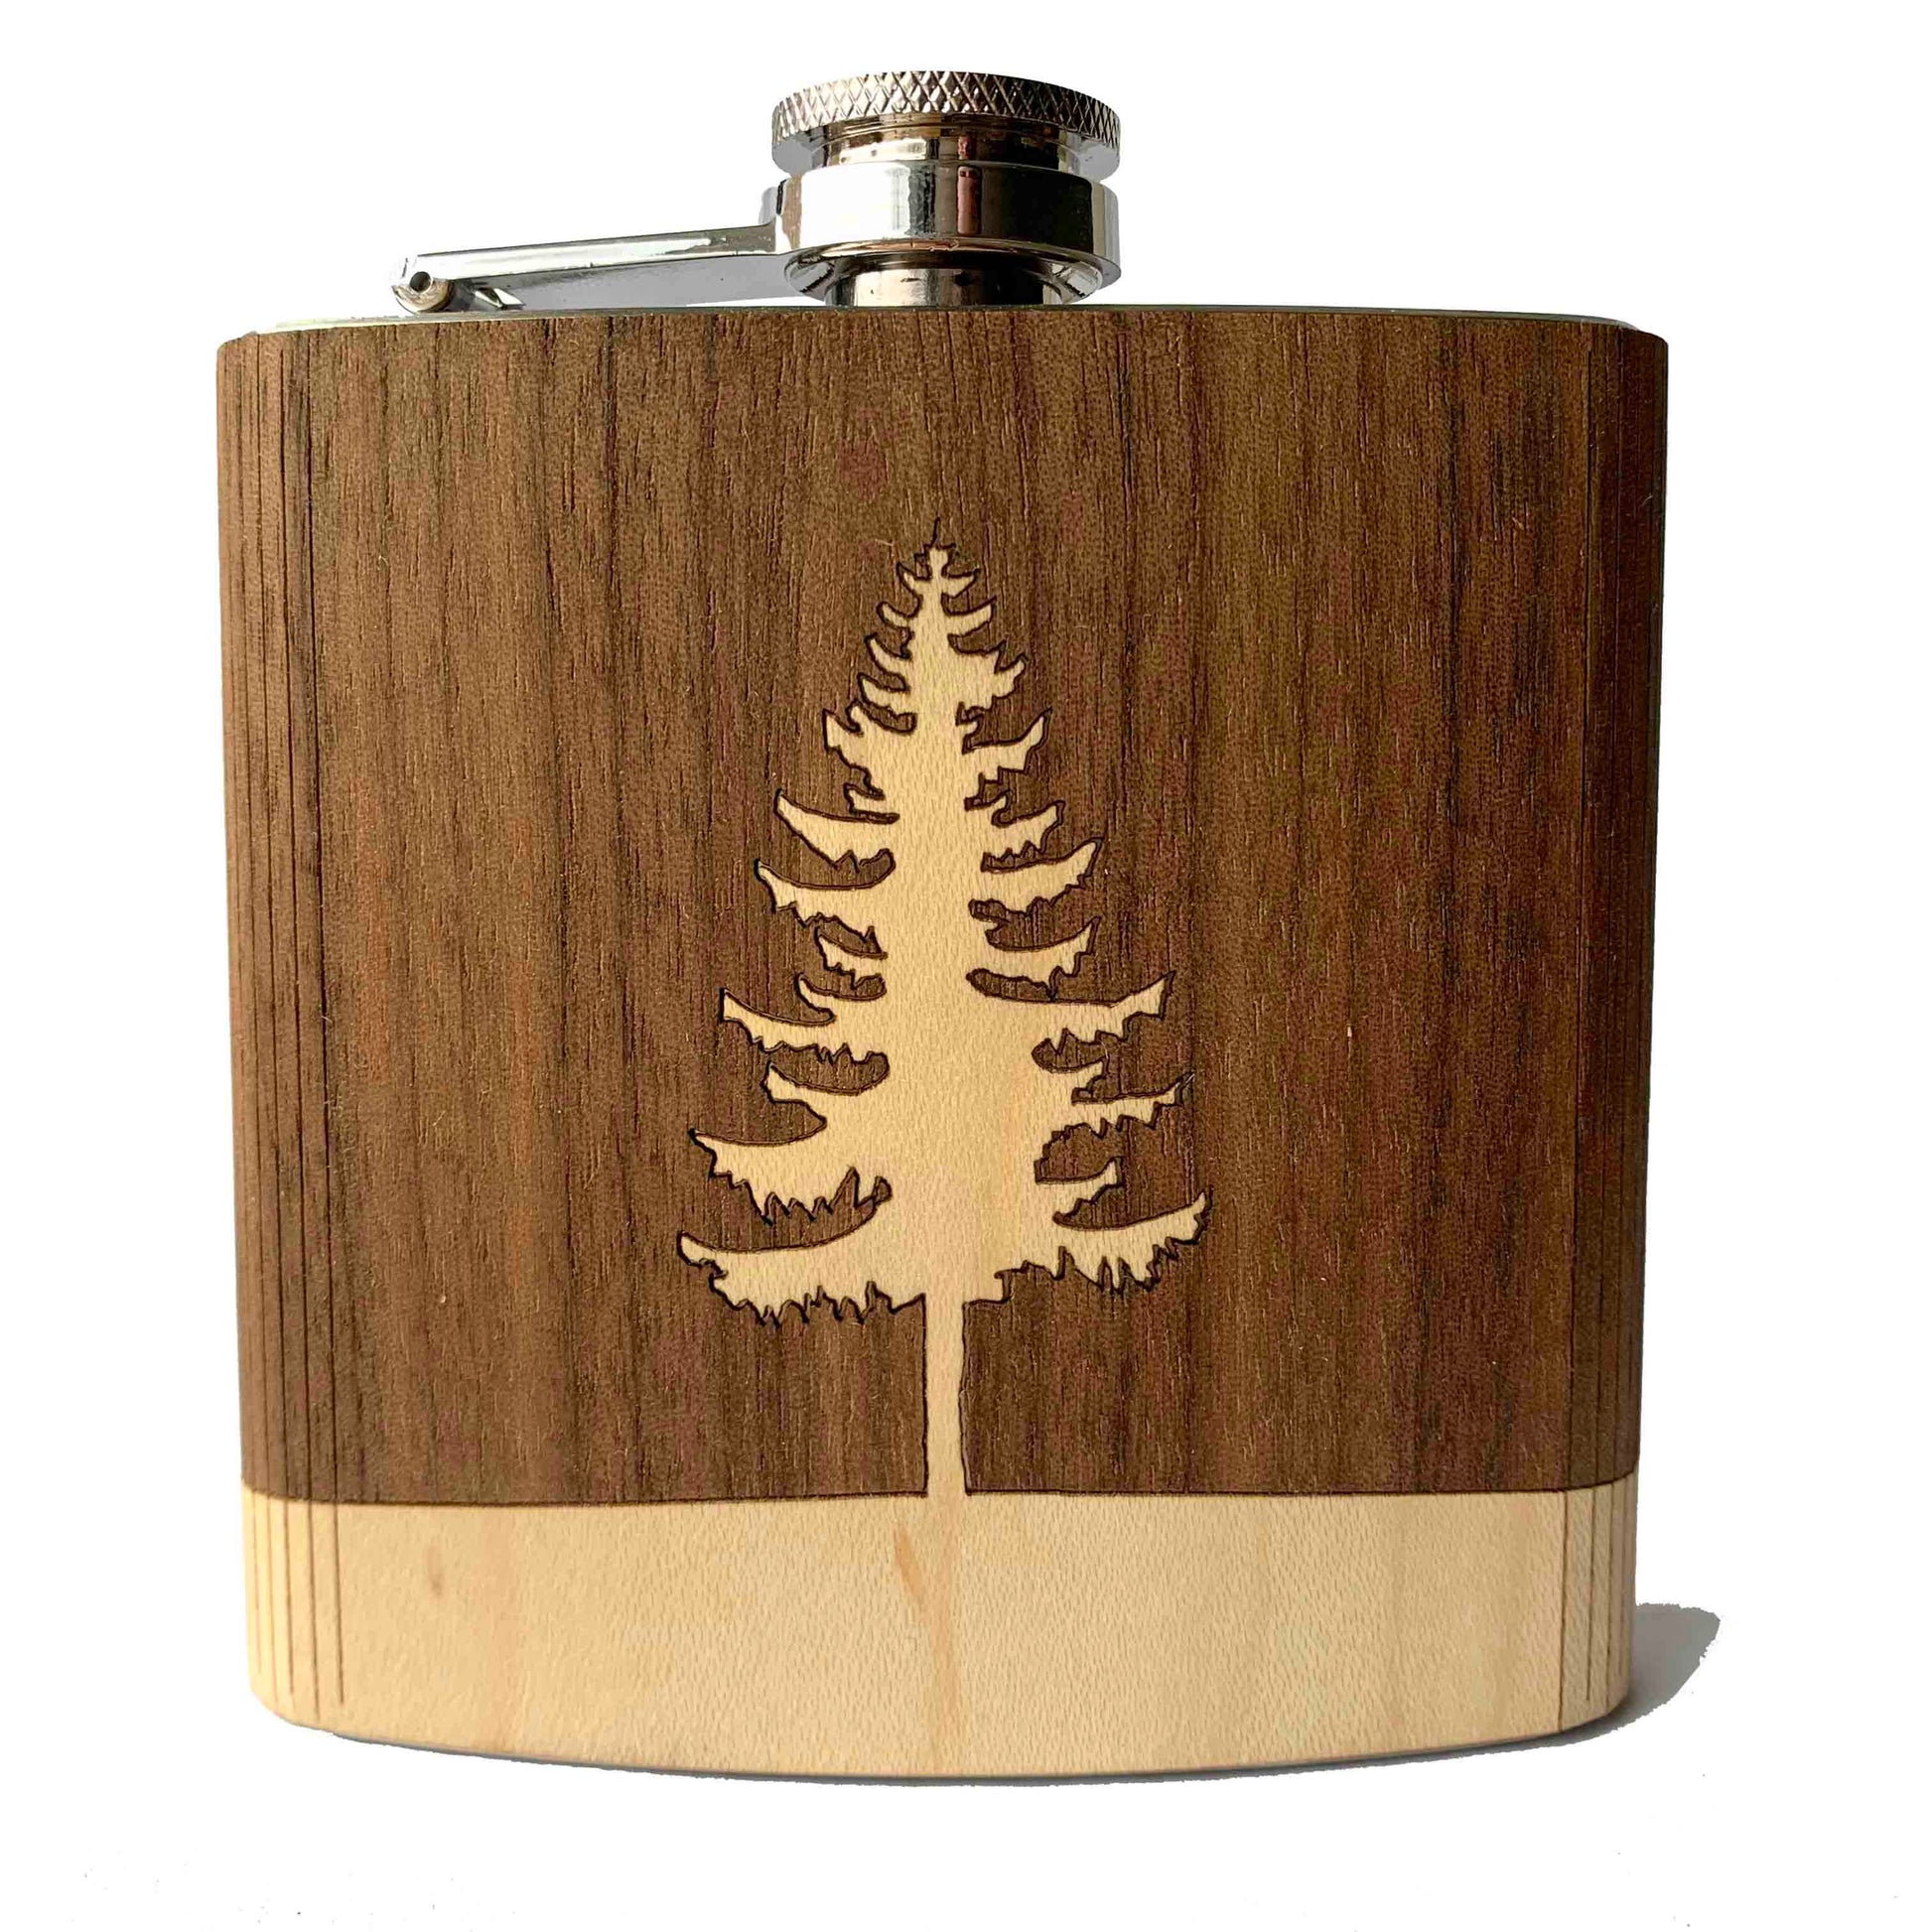 Custom Wooden Flasks - Autumn Woods Co.